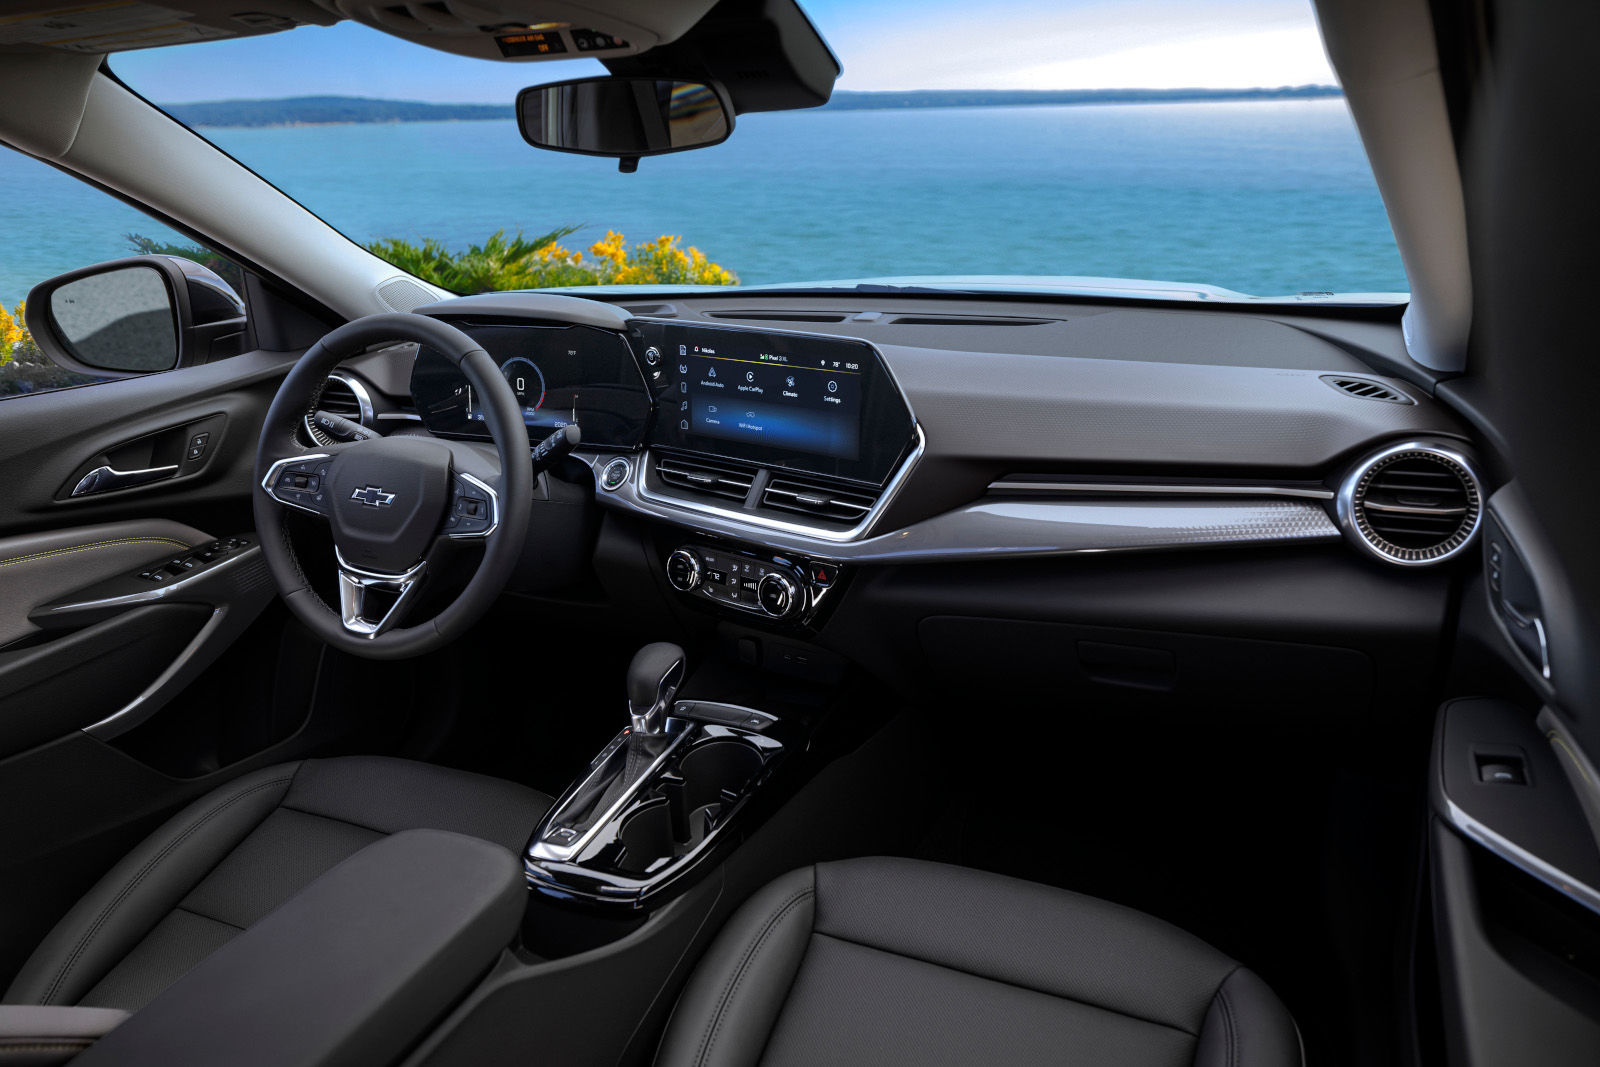 2024 Chevrolet Trax interior overlooking horizon - Applewood Auto - Car Dealer Mississauga